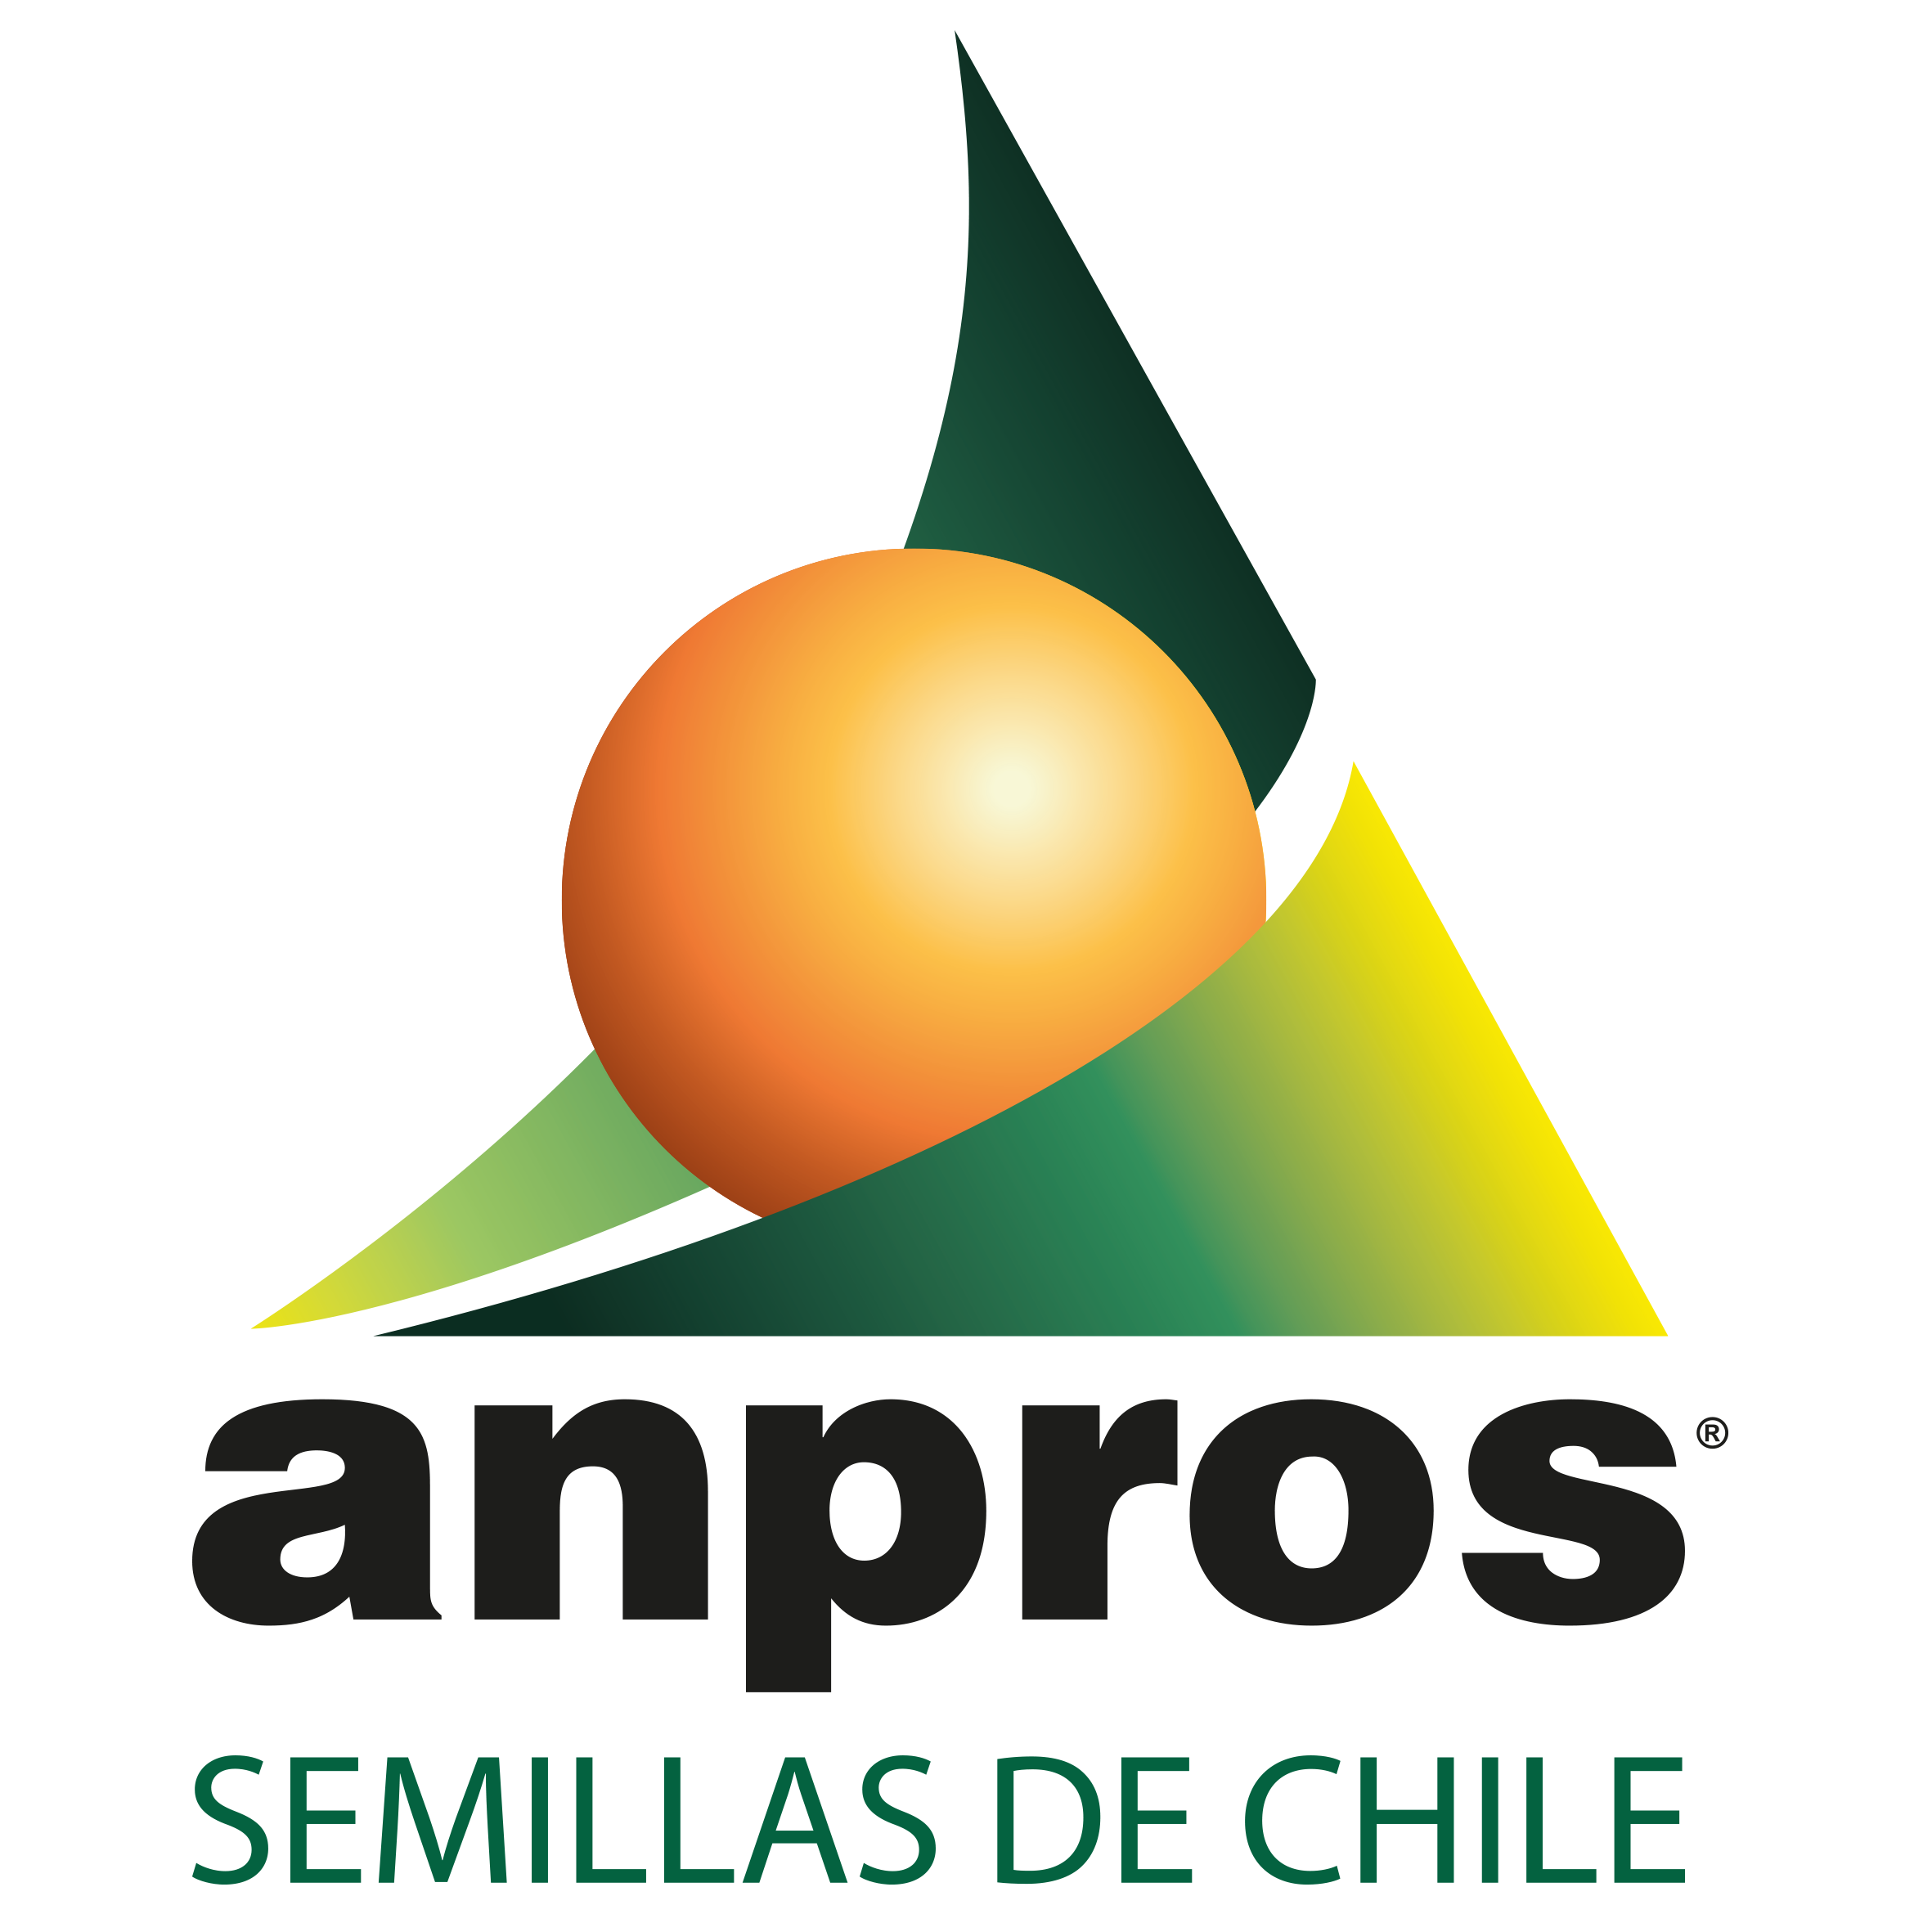 ANPROS A.G. | 196 cupos ofrece Programa 2018 Certificación Competencias Laborales para empresas socias